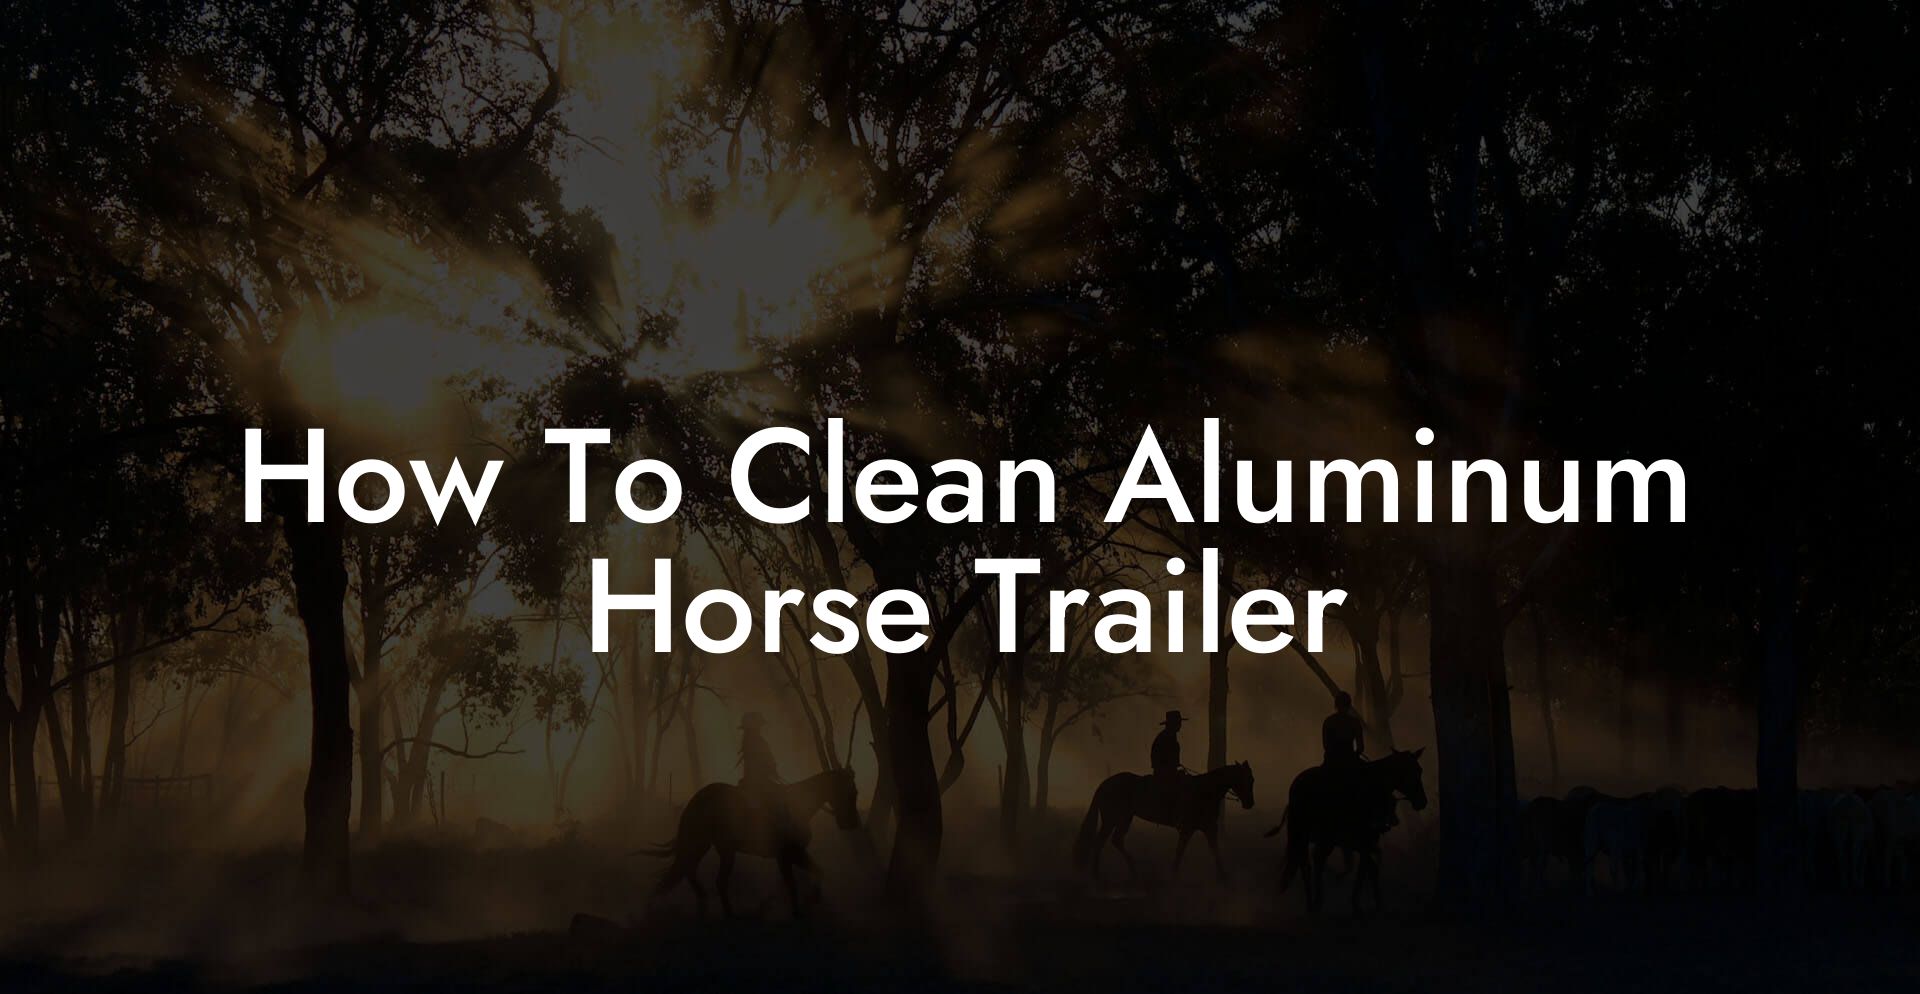 How To Clean Aluminum Horse Trailer